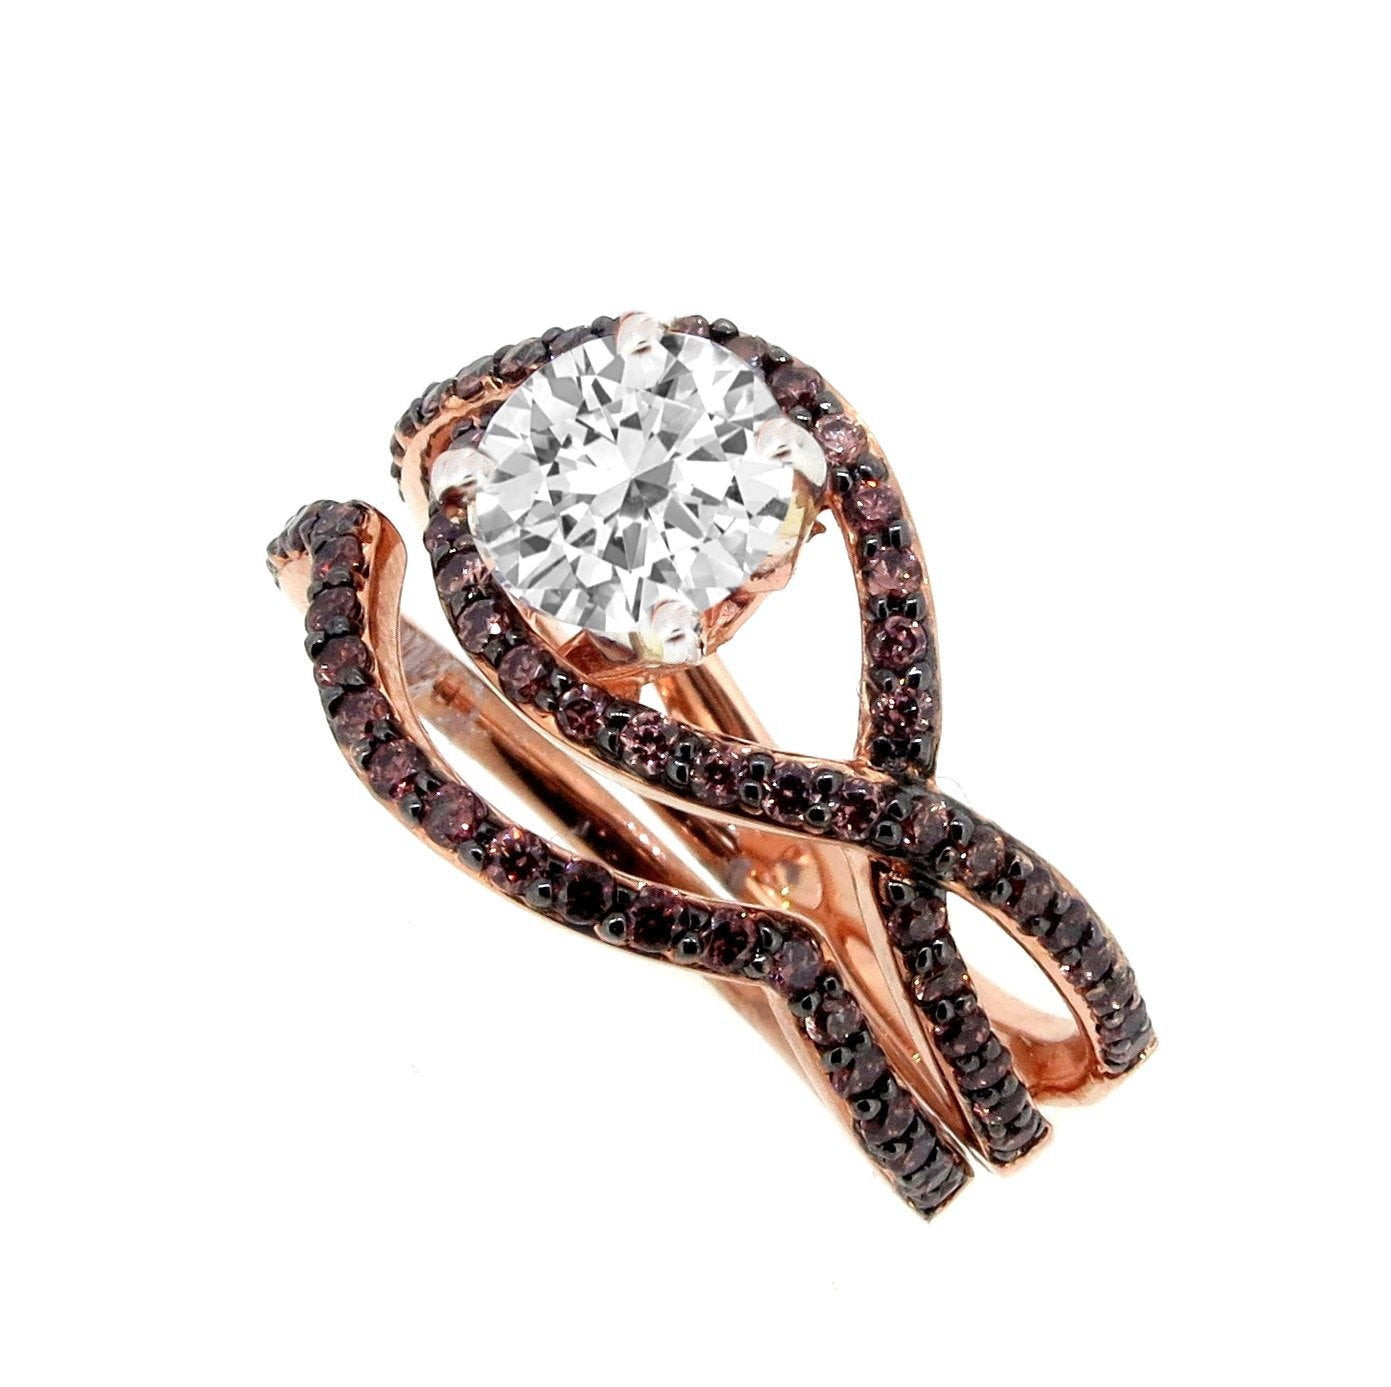 Chocolate Diamonds Wedding Rings
 Unique Infinity Chocolate Brown Diamond Engagement and